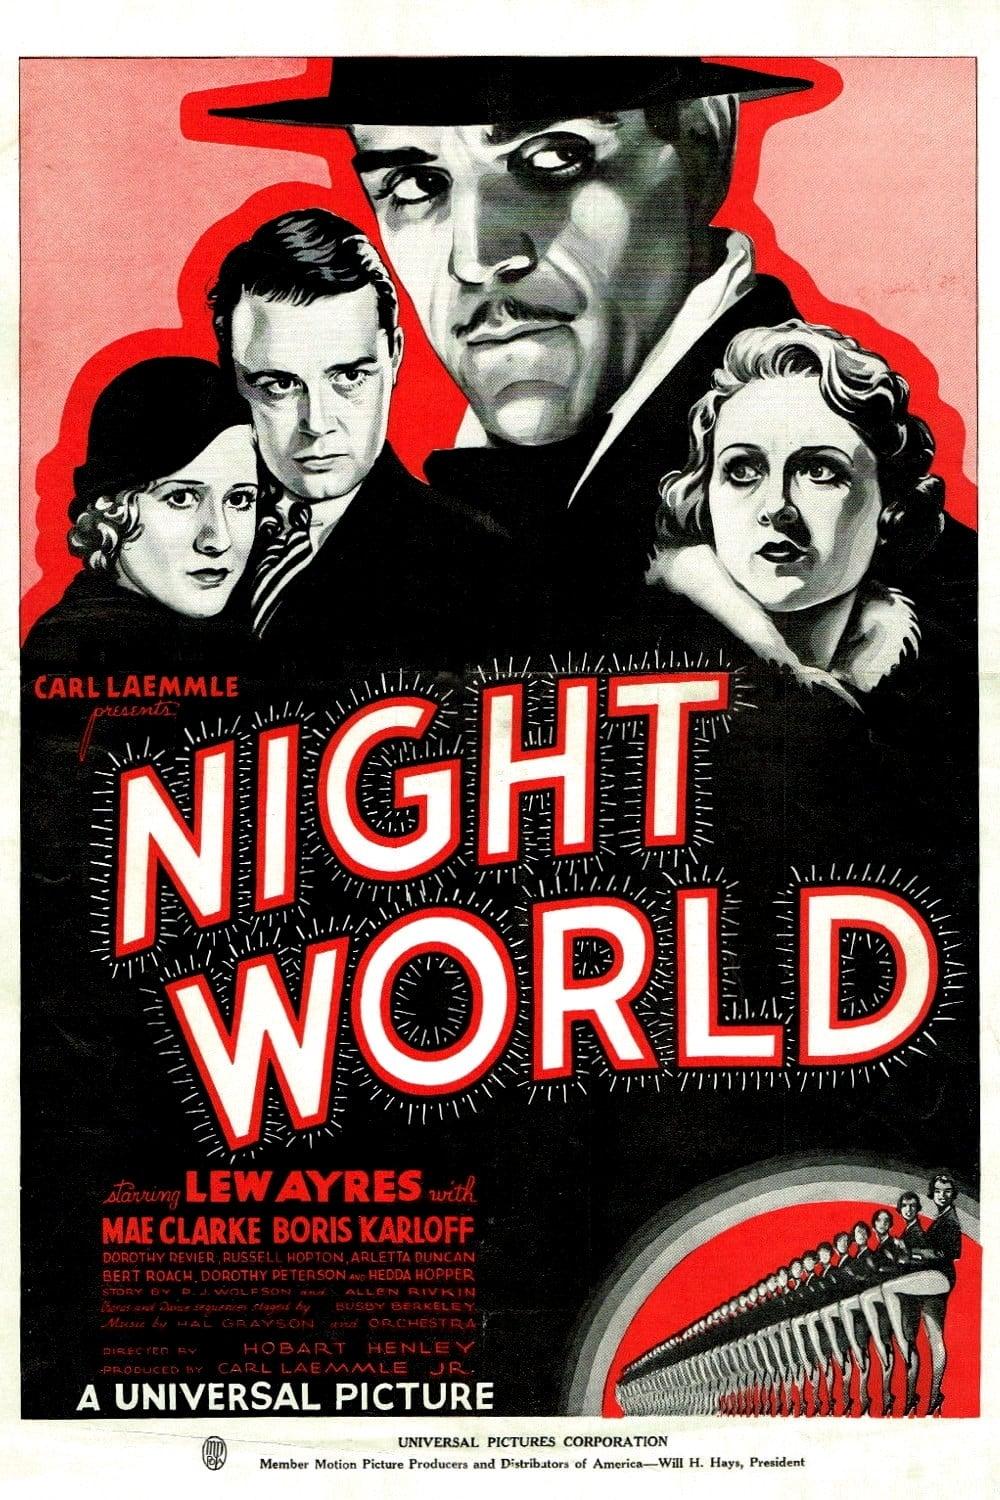 Night World poster